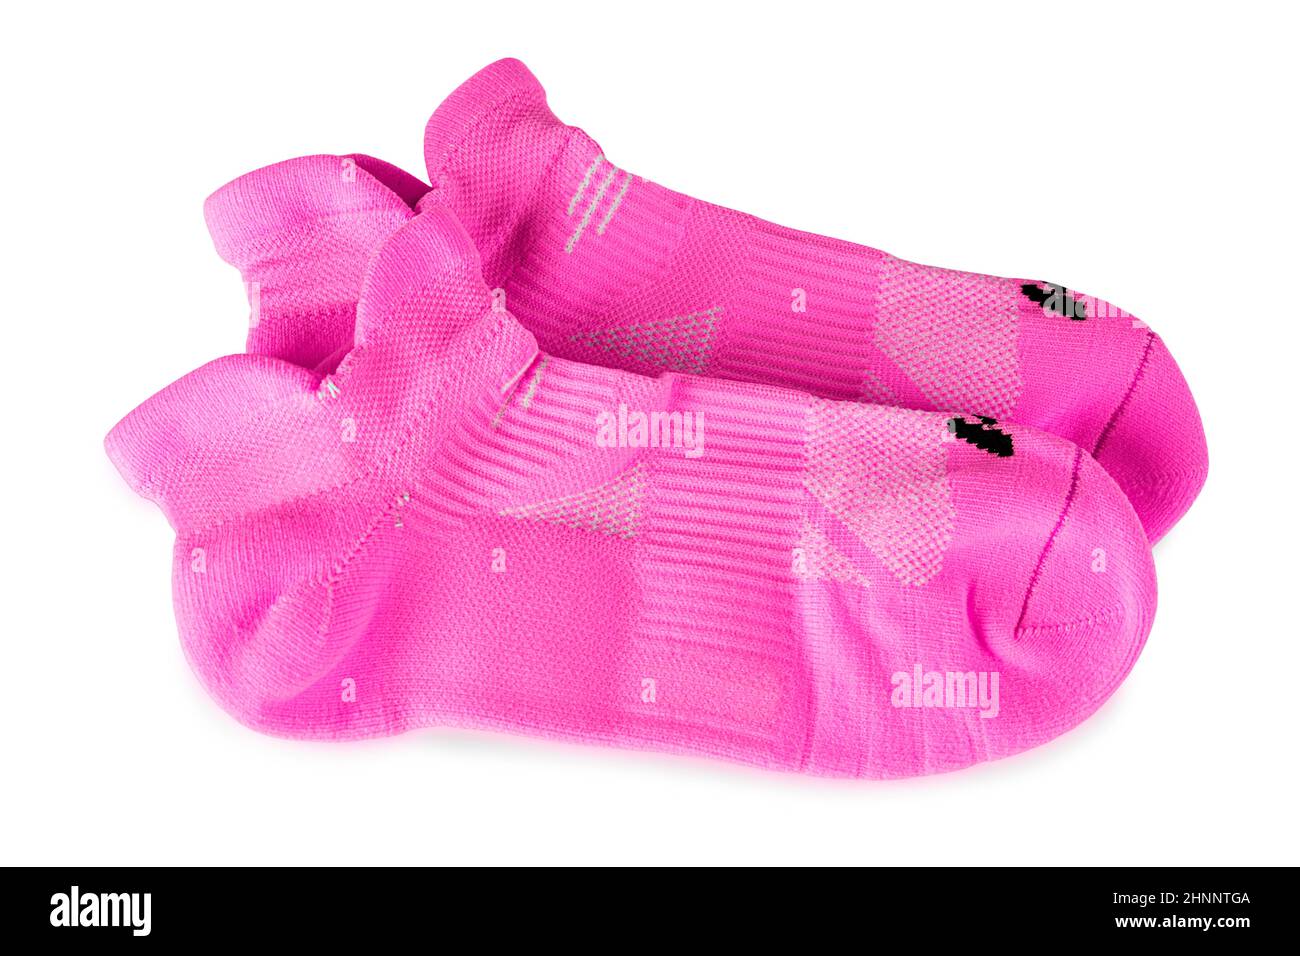 new pionk sports socks isolated on white background Stock Photo